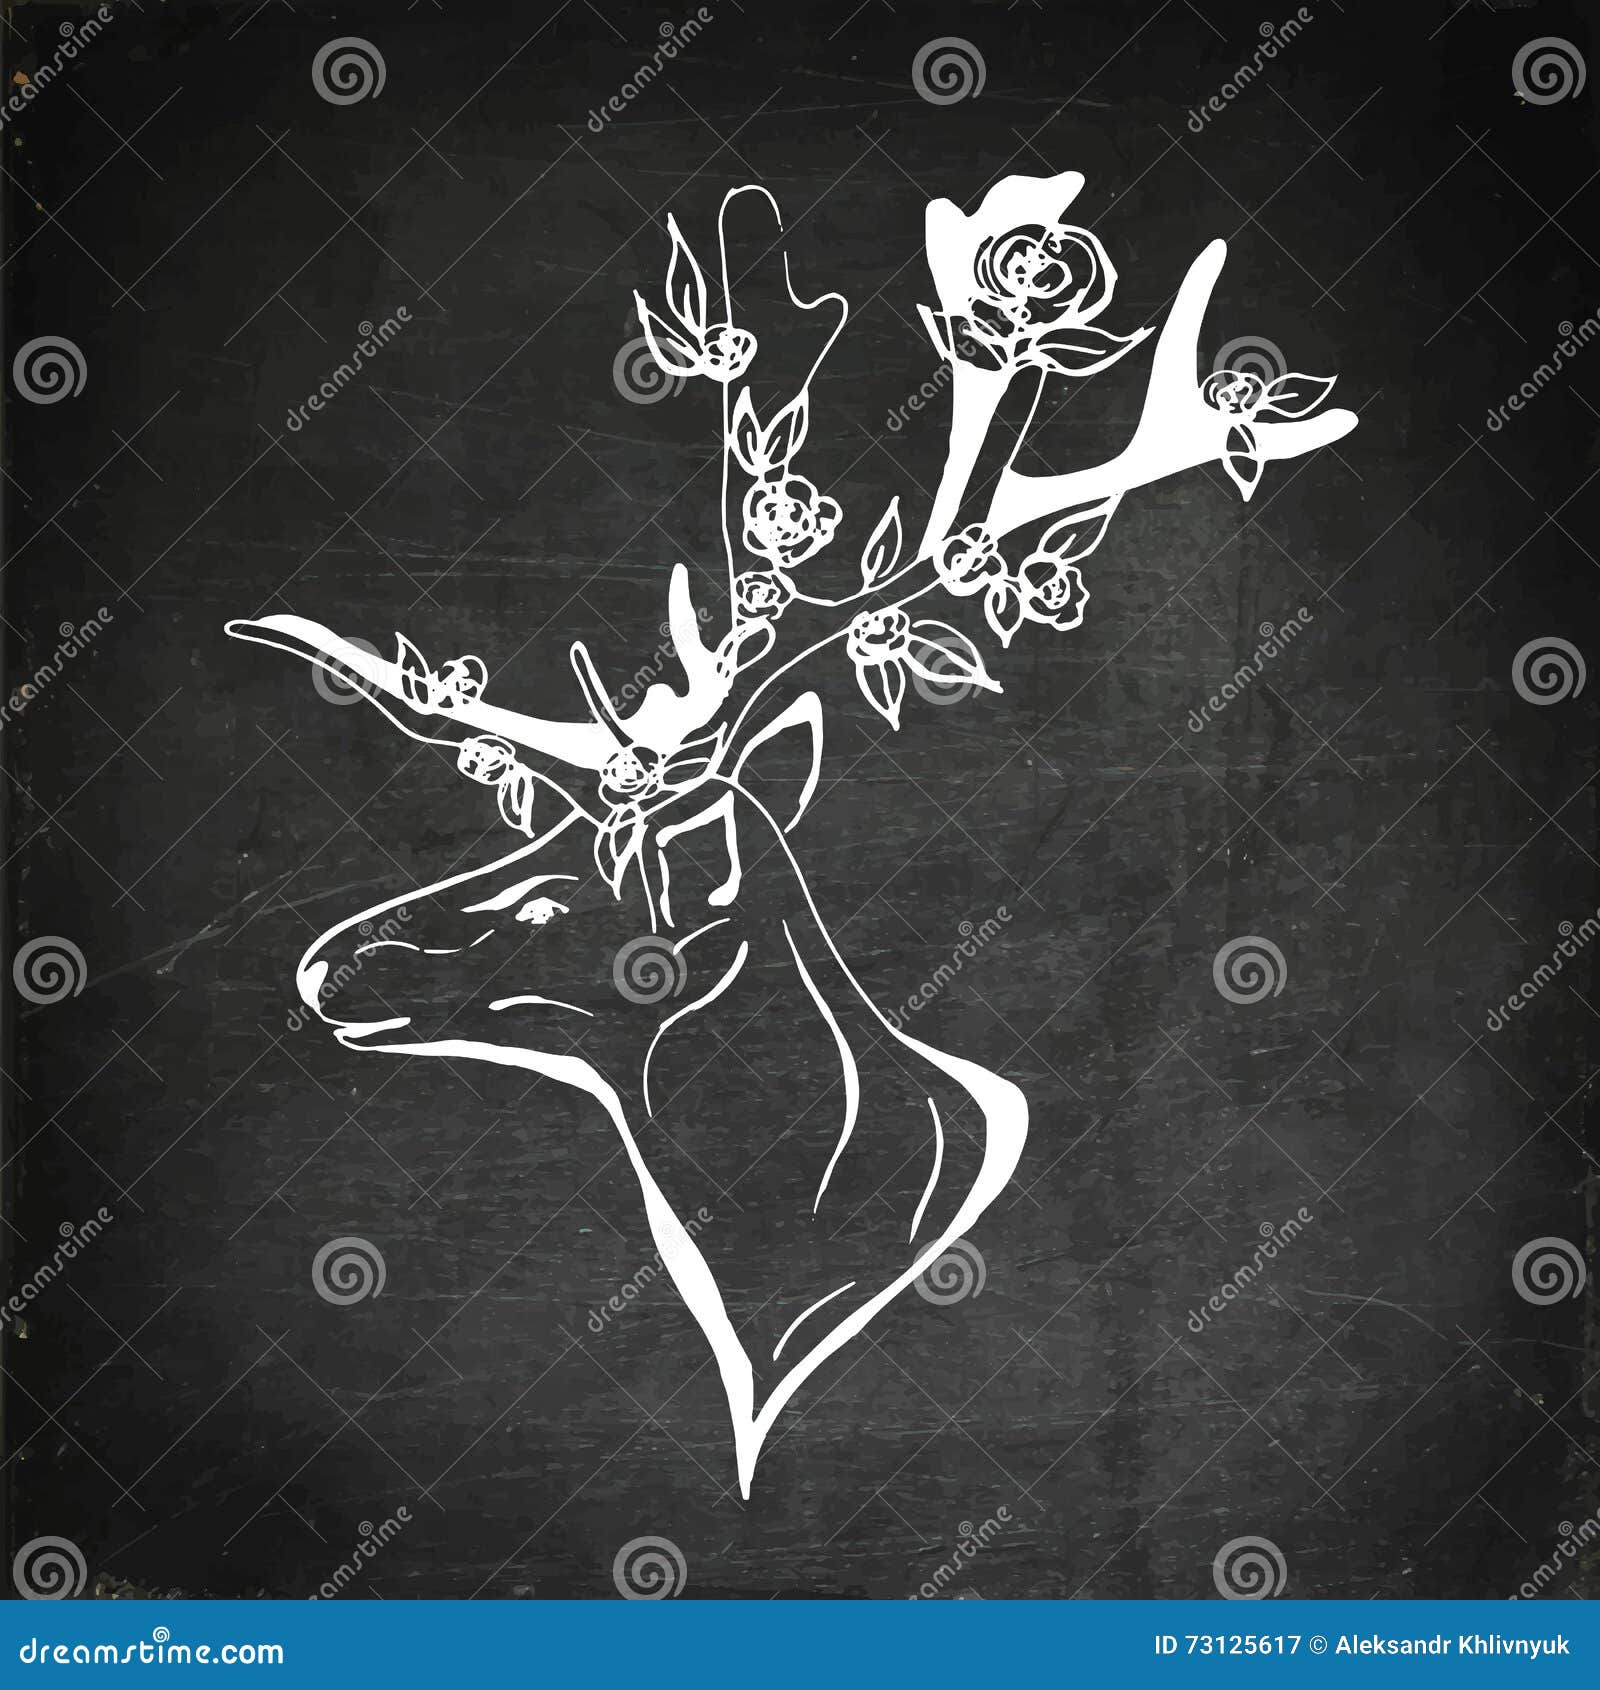  Deer with large antlers stock illustration. Illustration of handdrawn 